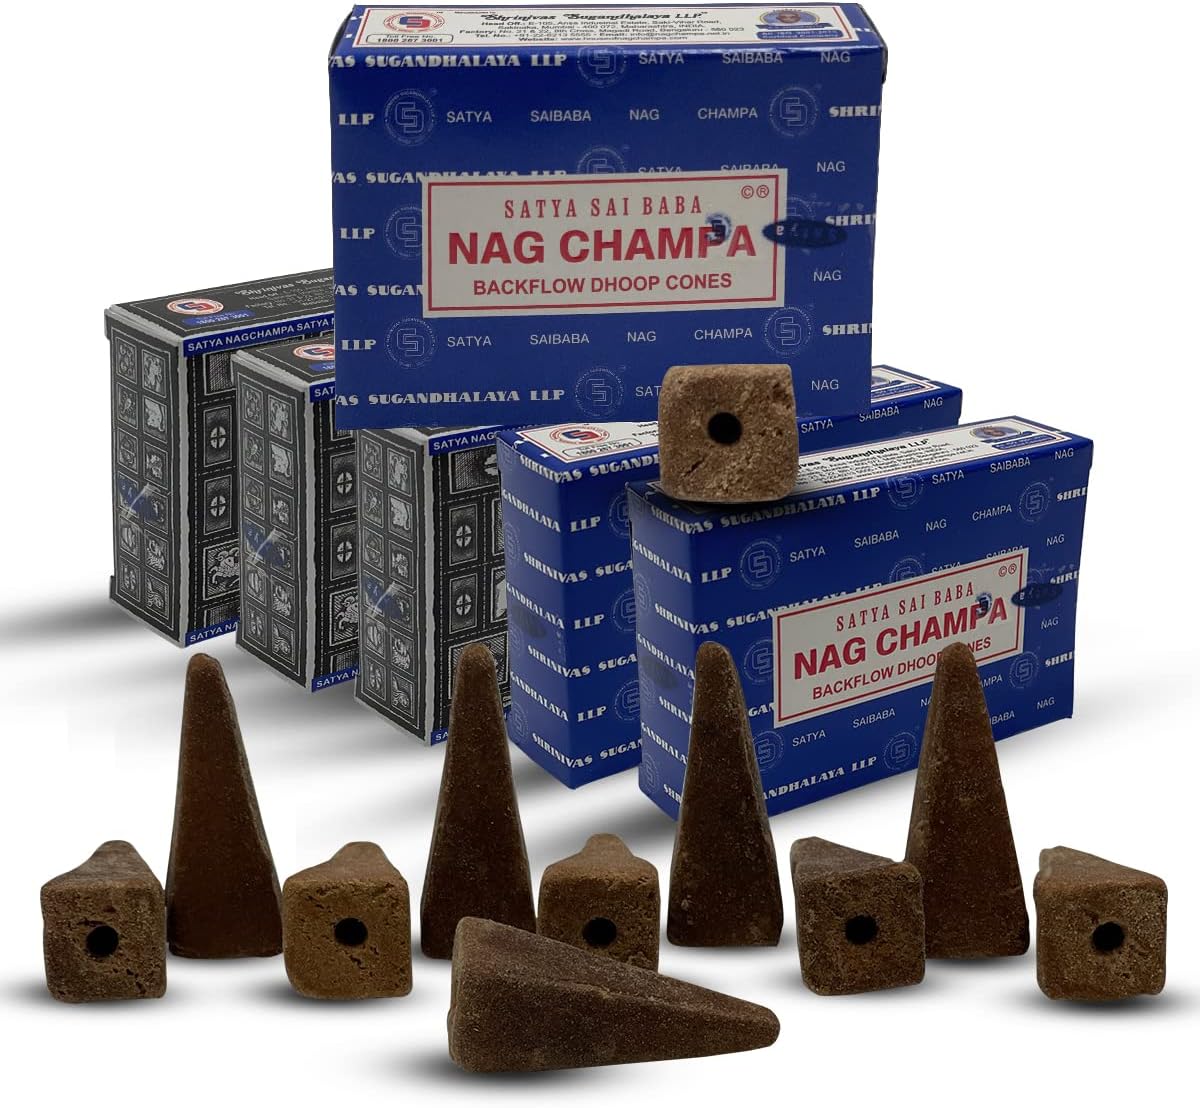 Satya Sai Baba Nag Champa and Super Hit Backflow Incense Cones Combo - 3+3 Packs of 10 cones each - Total Approx 60 cones